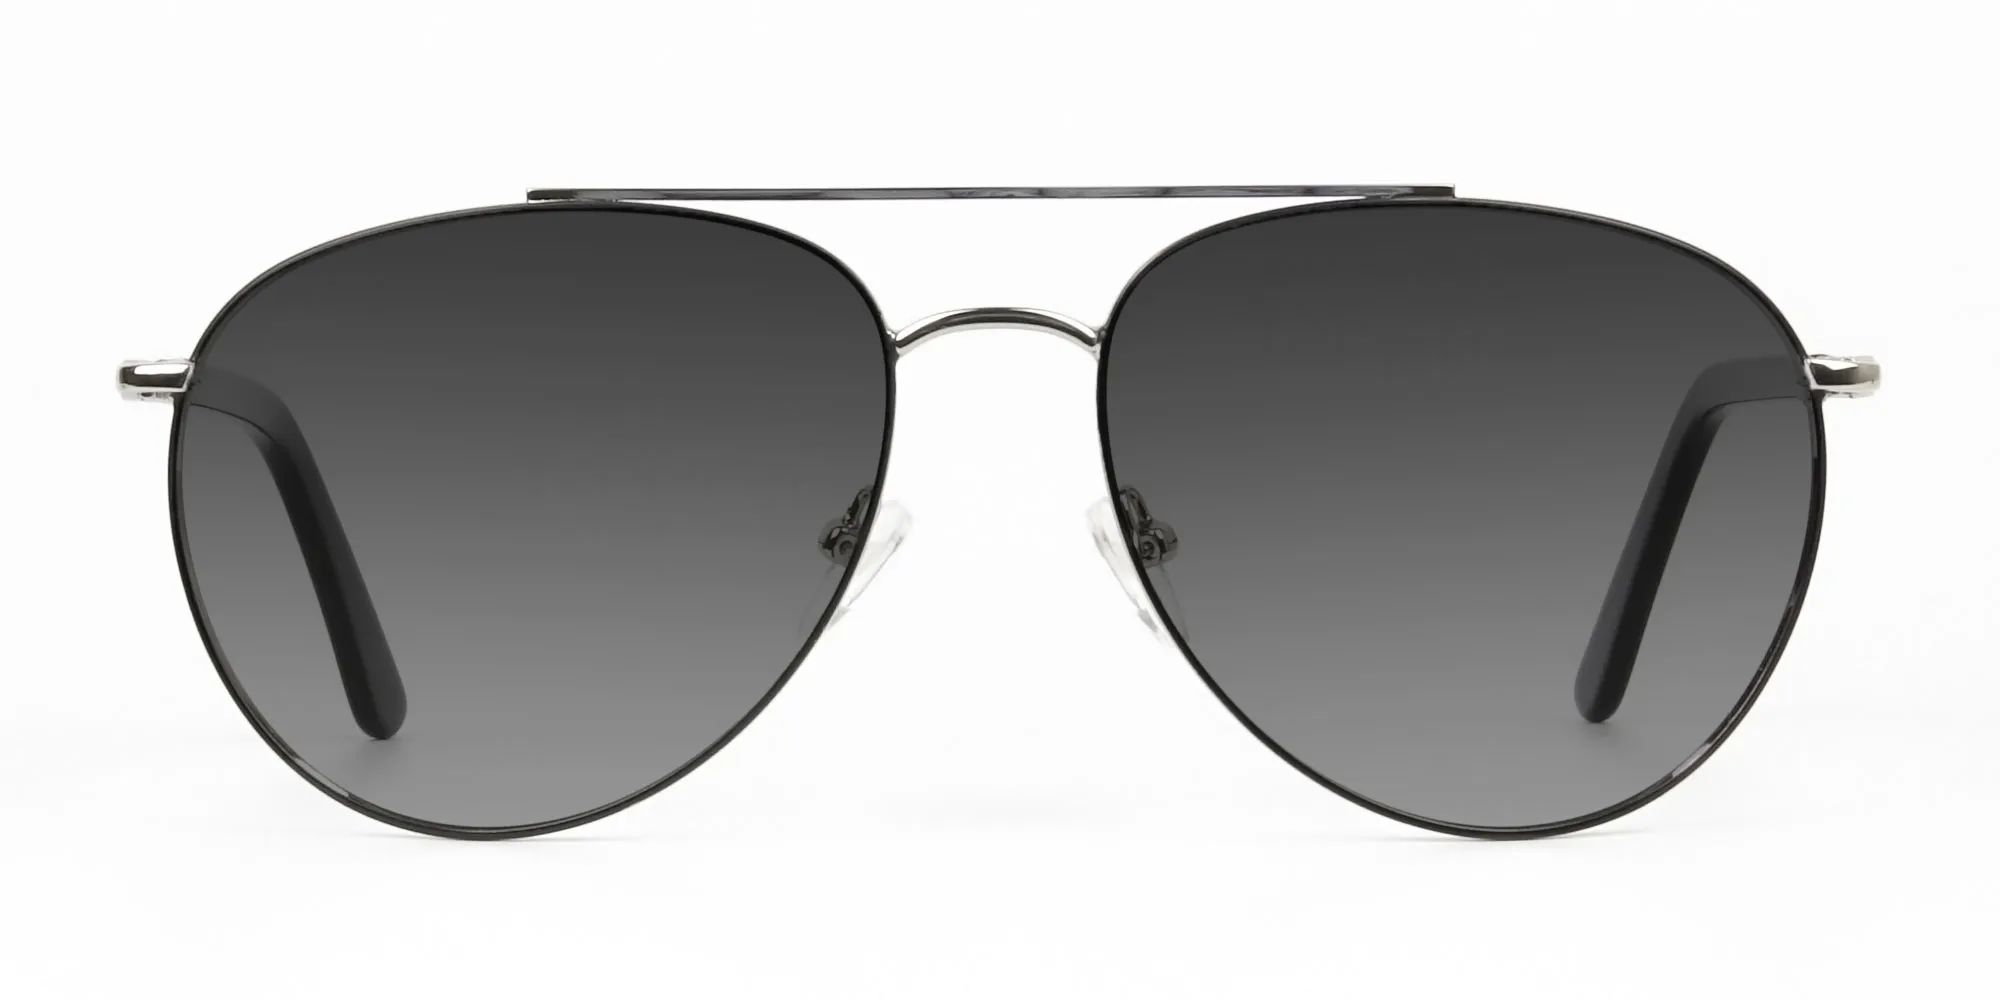 ultralight-black-silver-pilot-grey-tinted-sunglasses-frames-2